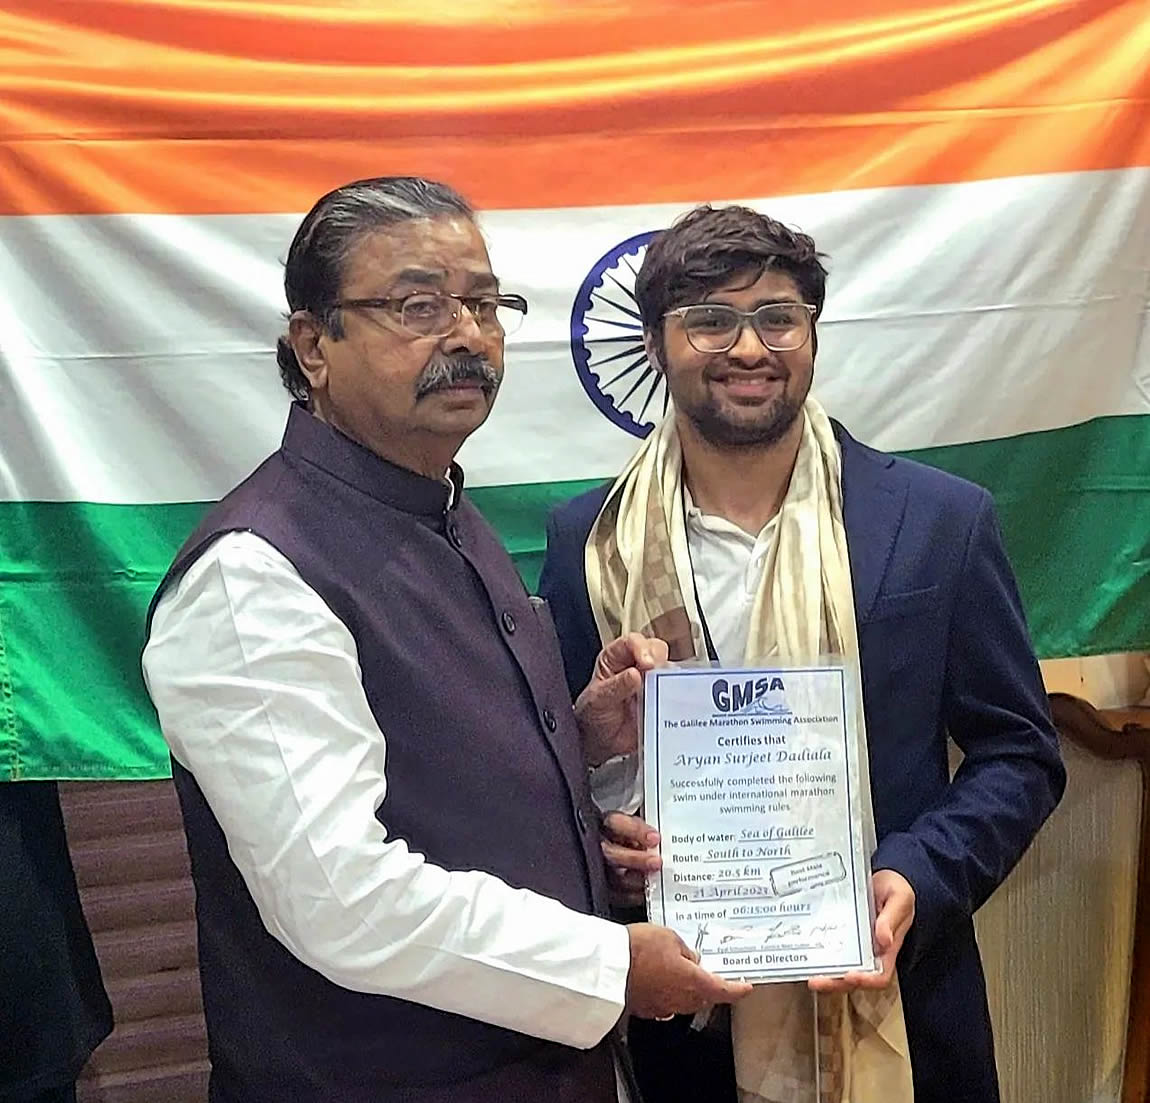 Aryan Singh Dadiala Felicitated by Shri Gajanan Kirtikar Member of Parliament (MP) from Mumbai North West (Lok Sabha constituency) in Mumbai, Maharashtra, India.